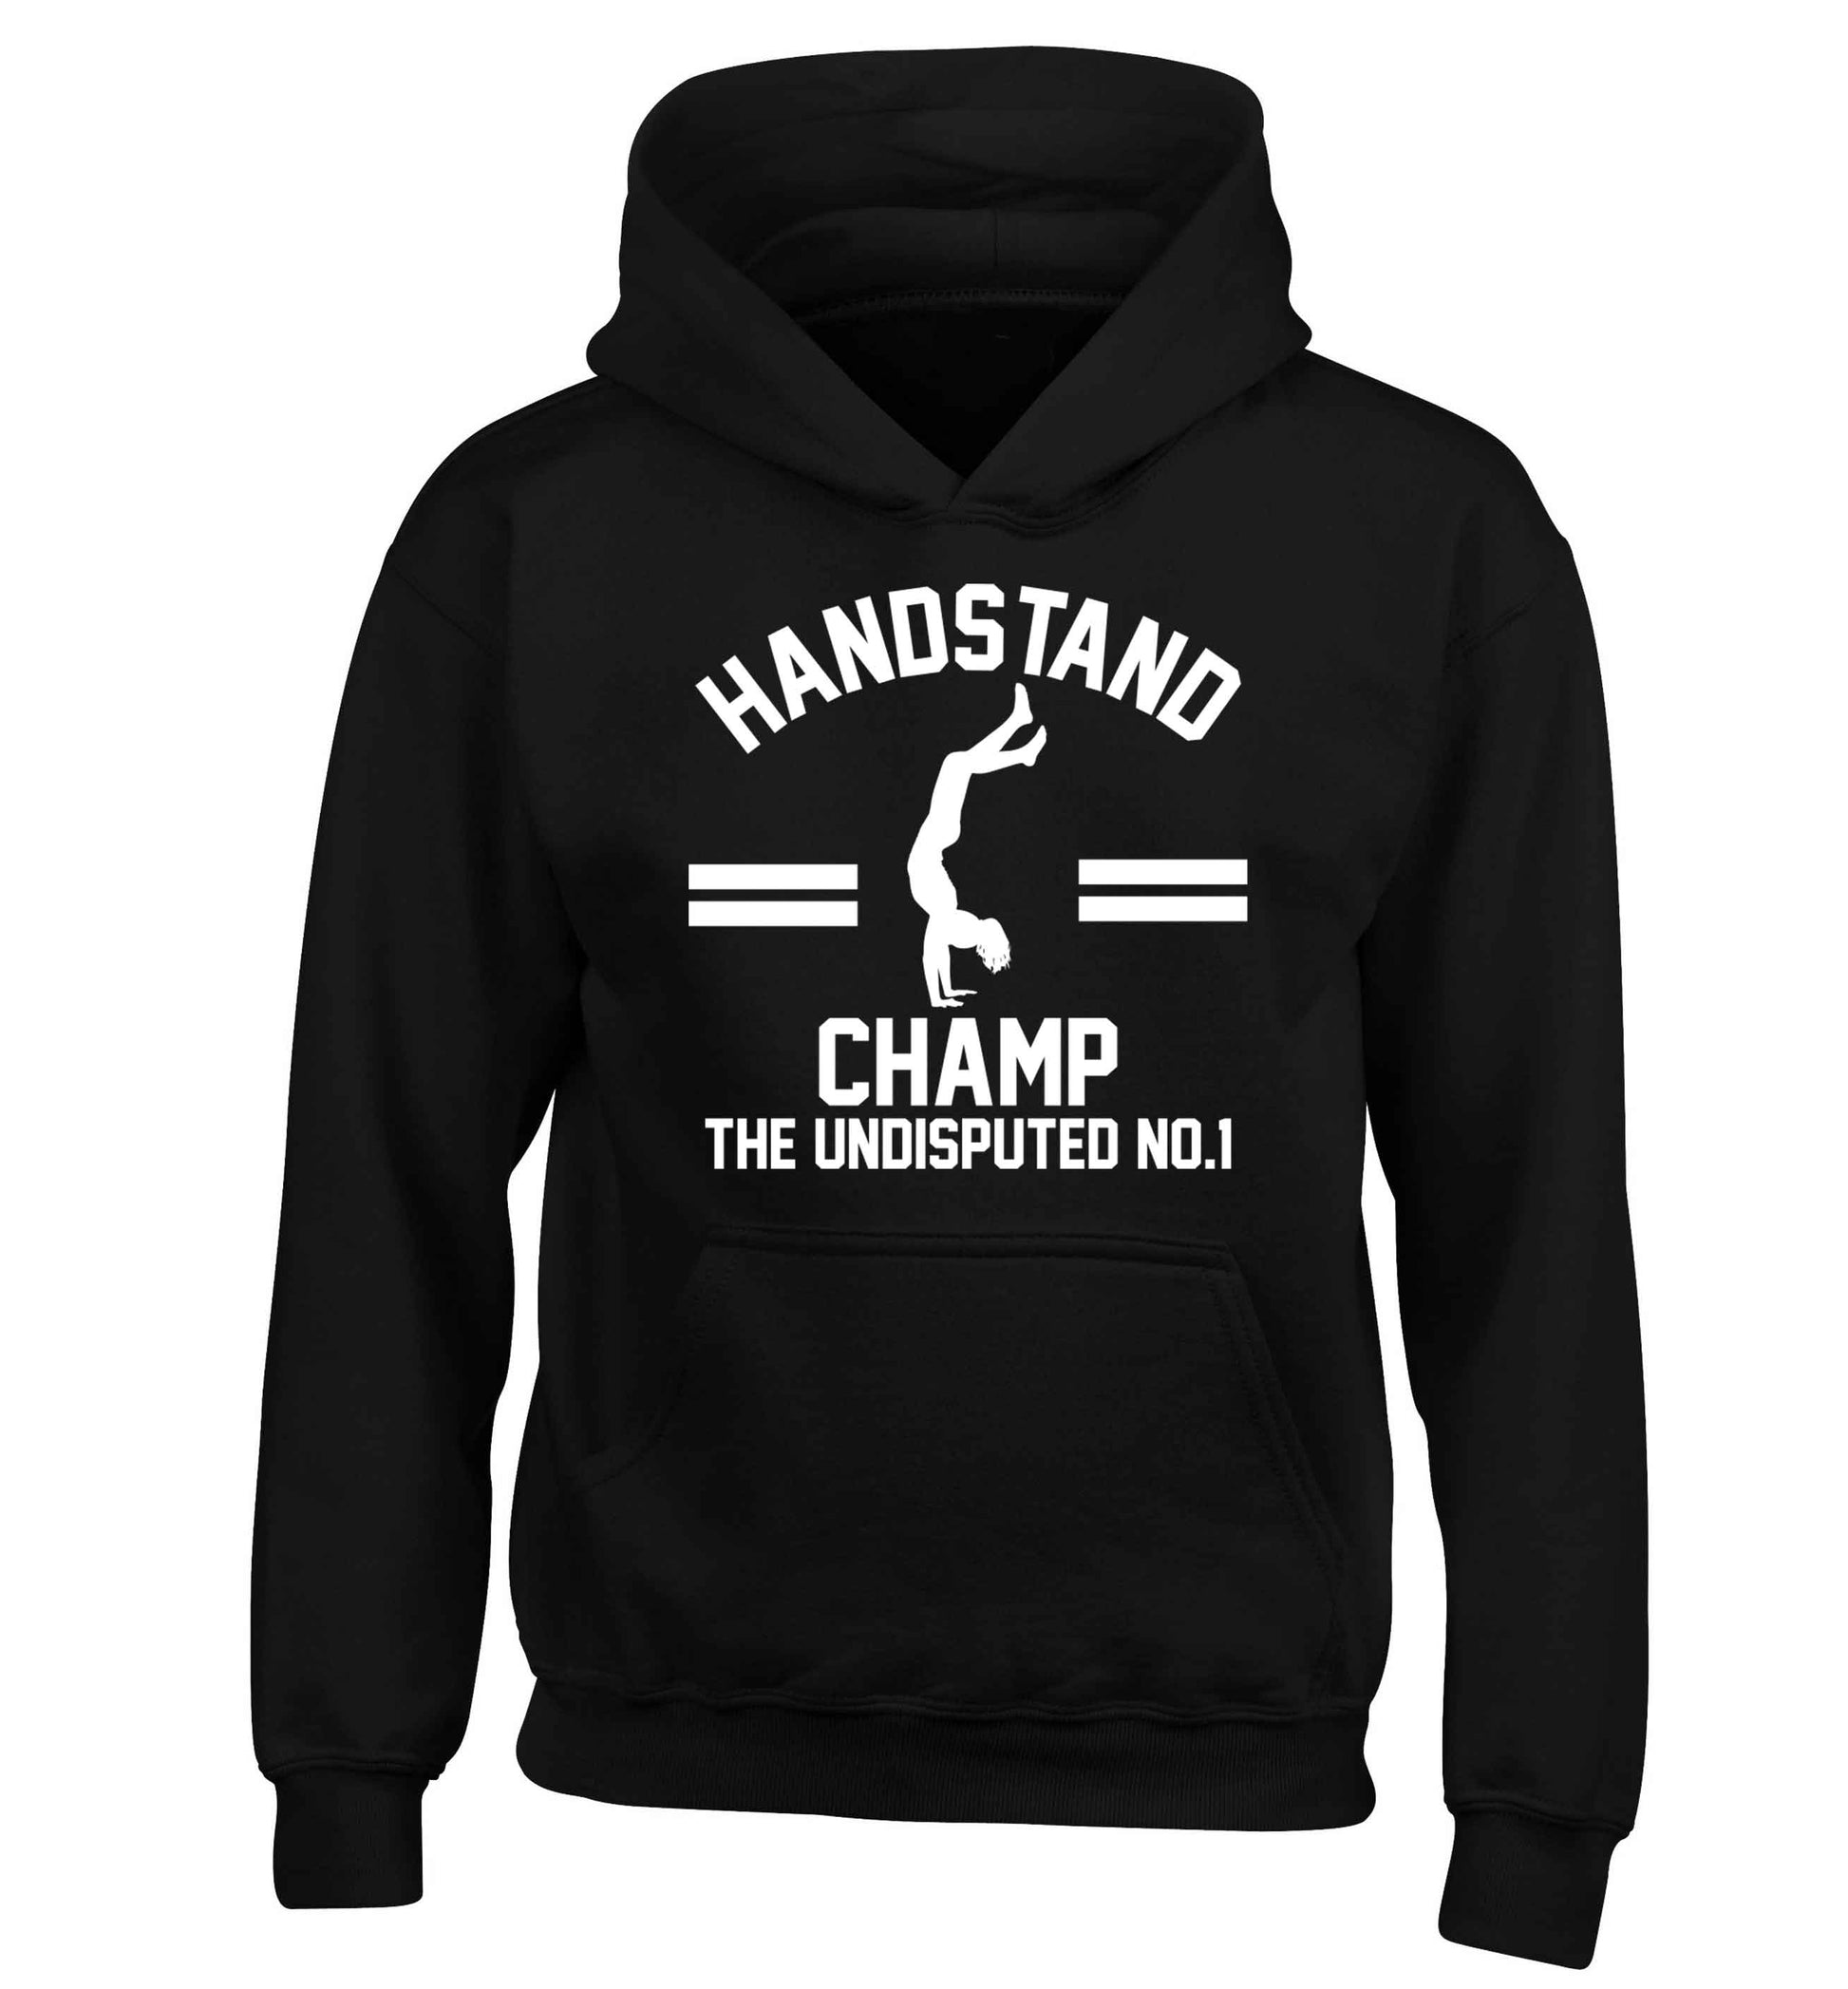 Undisputed handstand championship no.1  children's black hoodie 12-13 Years